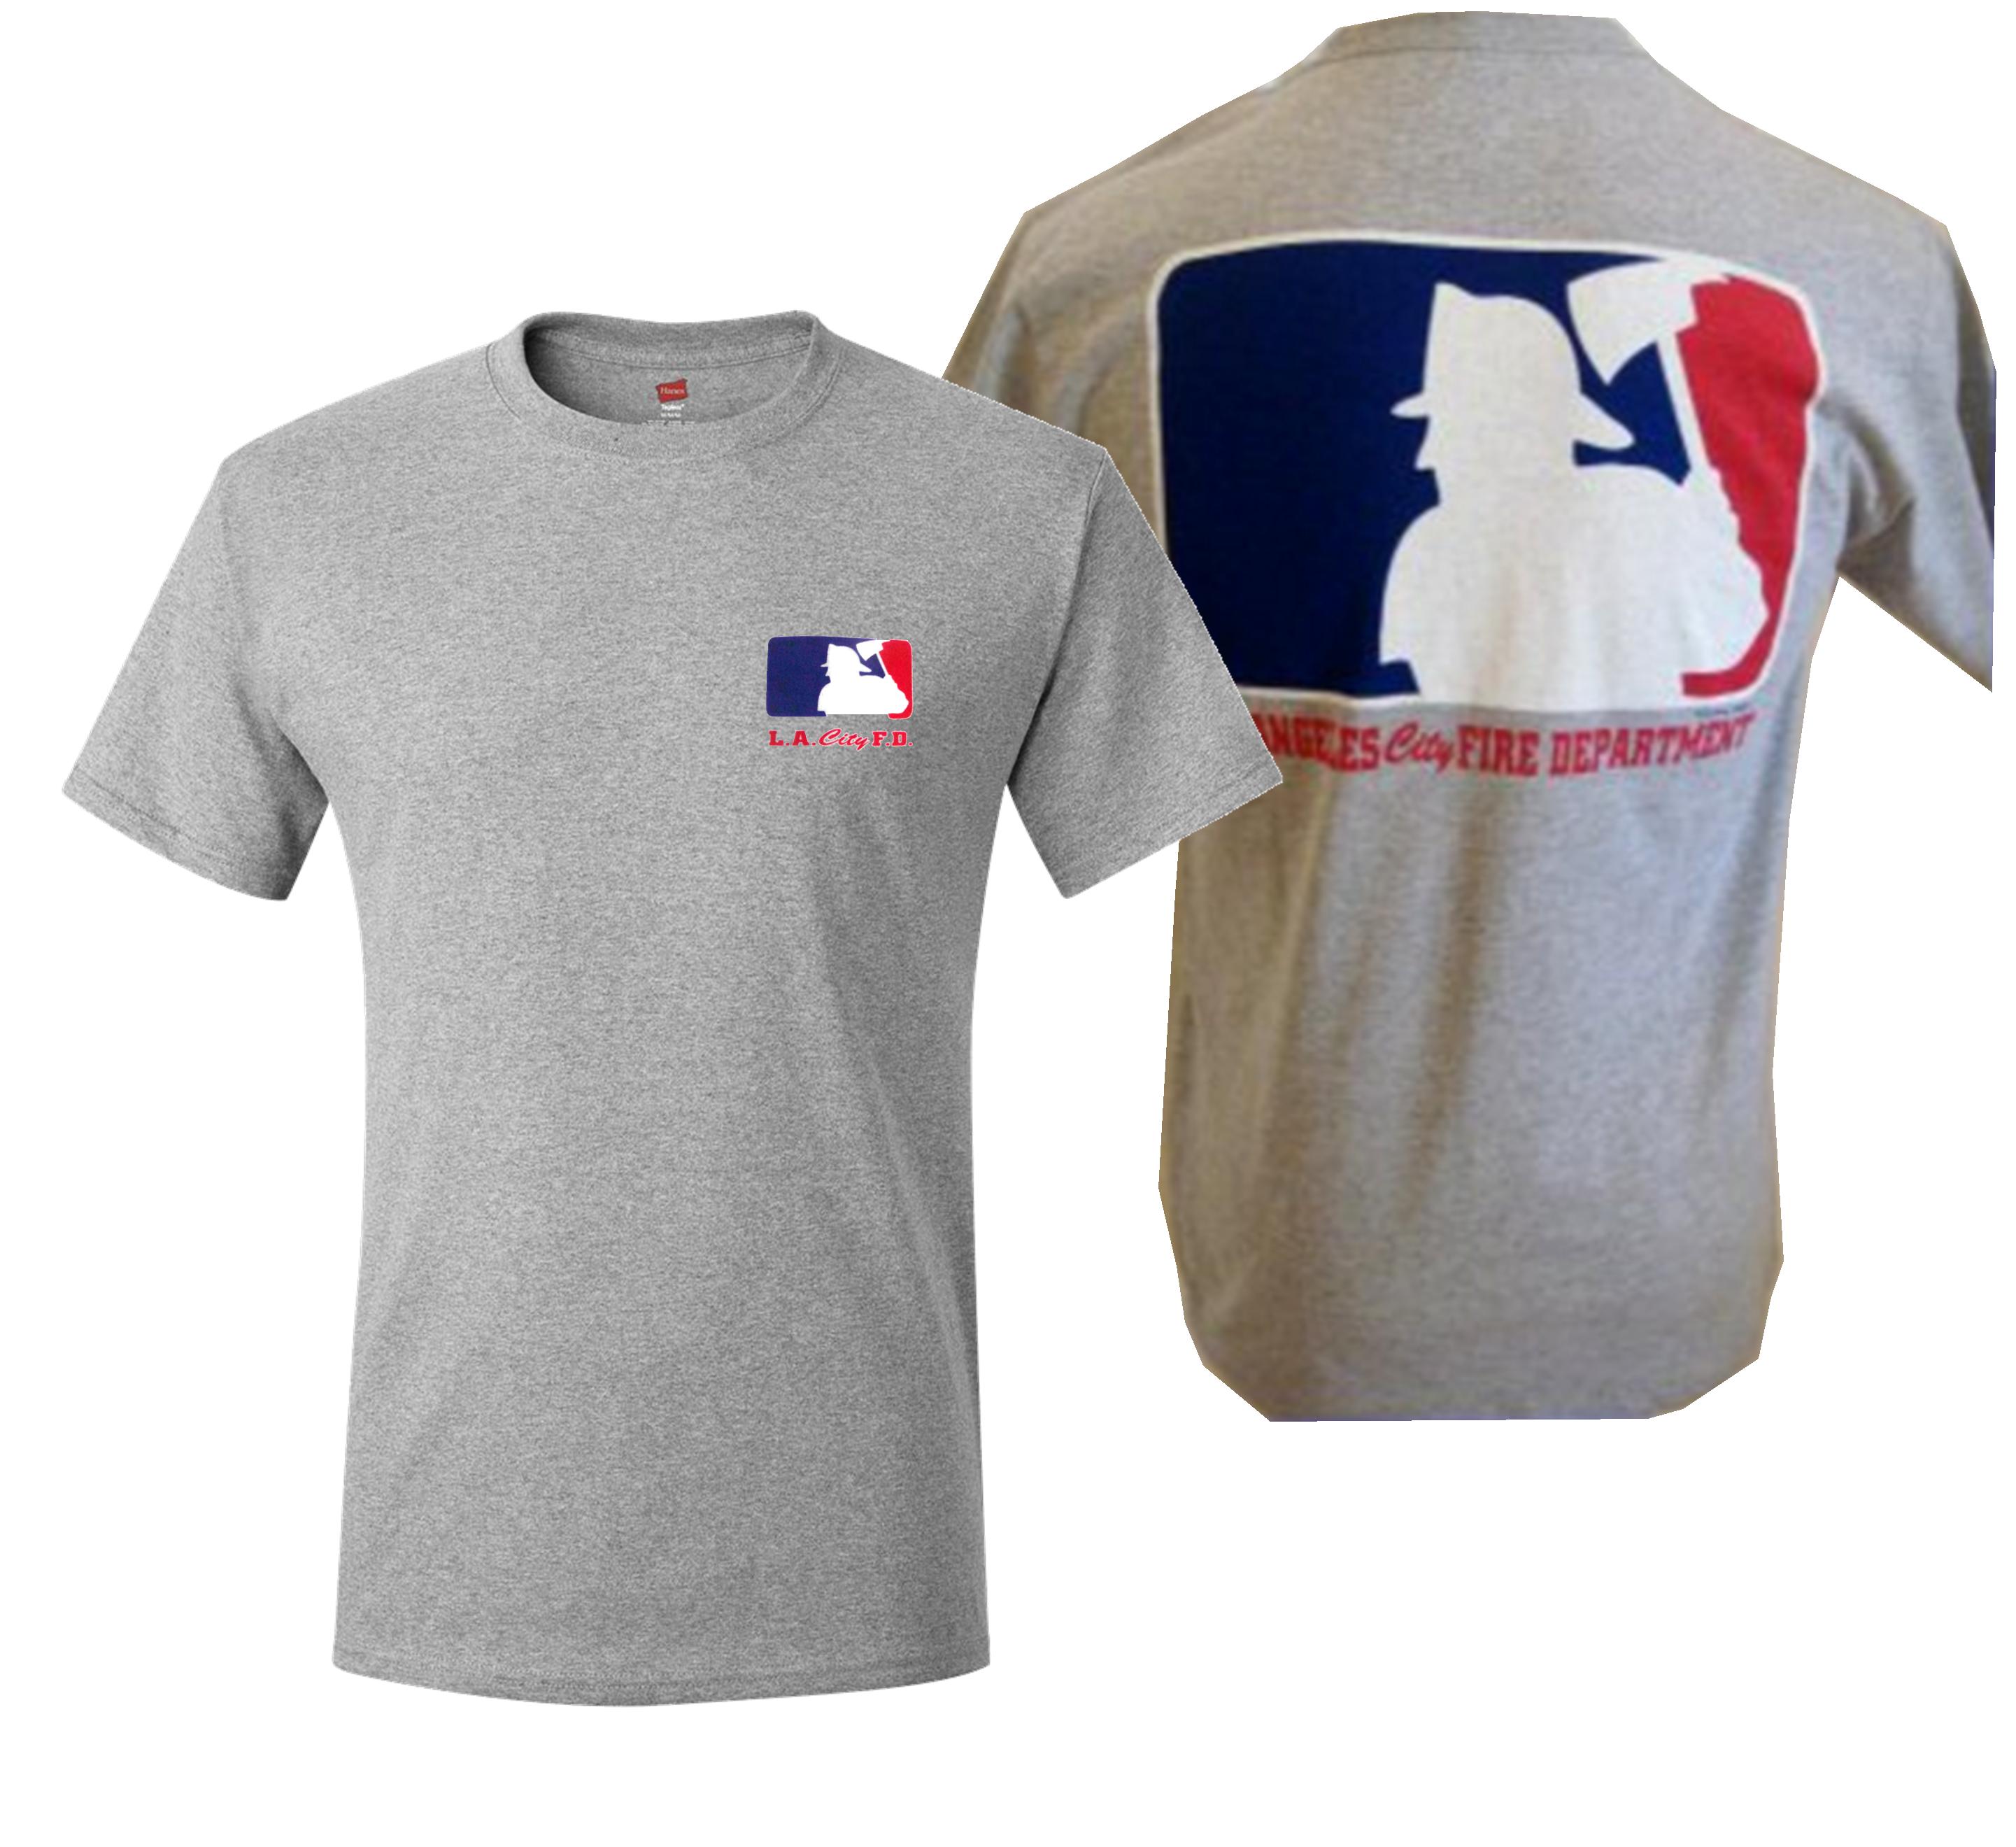 LAFD Major League Baseball Short Sleeve Tshirt  Fire Attire